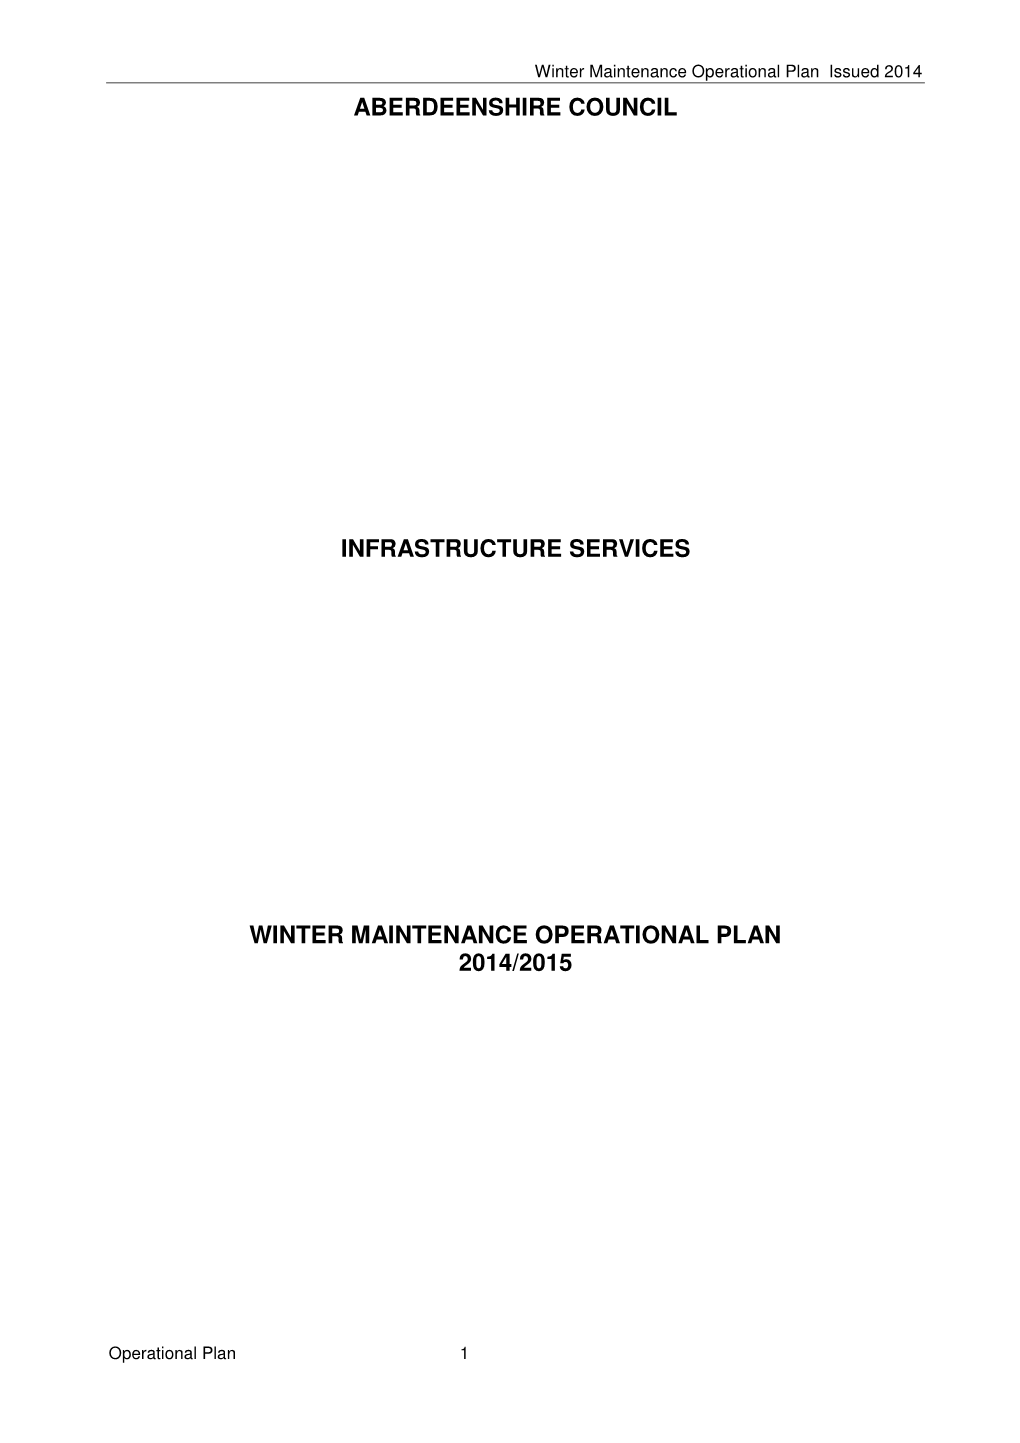 Aberdeenshire Council Infrastructure Services